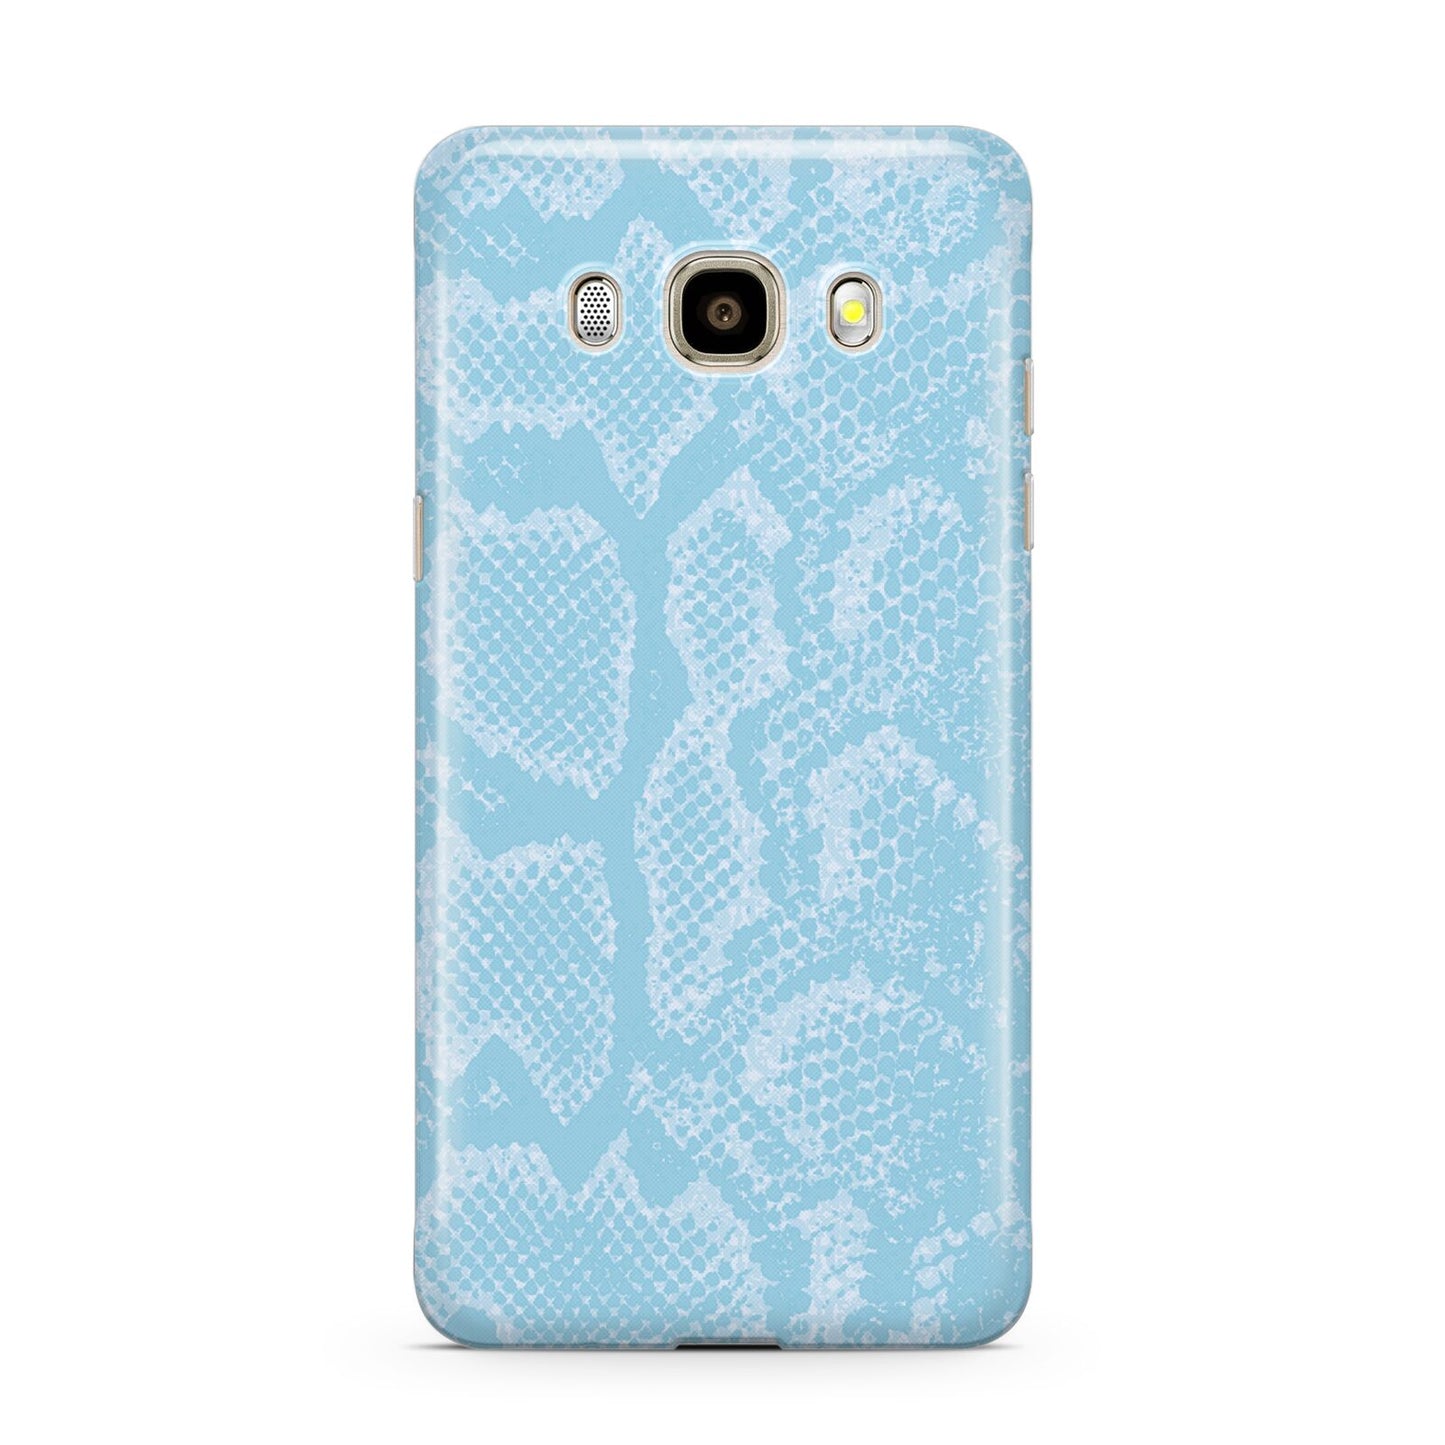 Blue Snakeskin Samsung Galaxy J7 2016 Case on gold phone